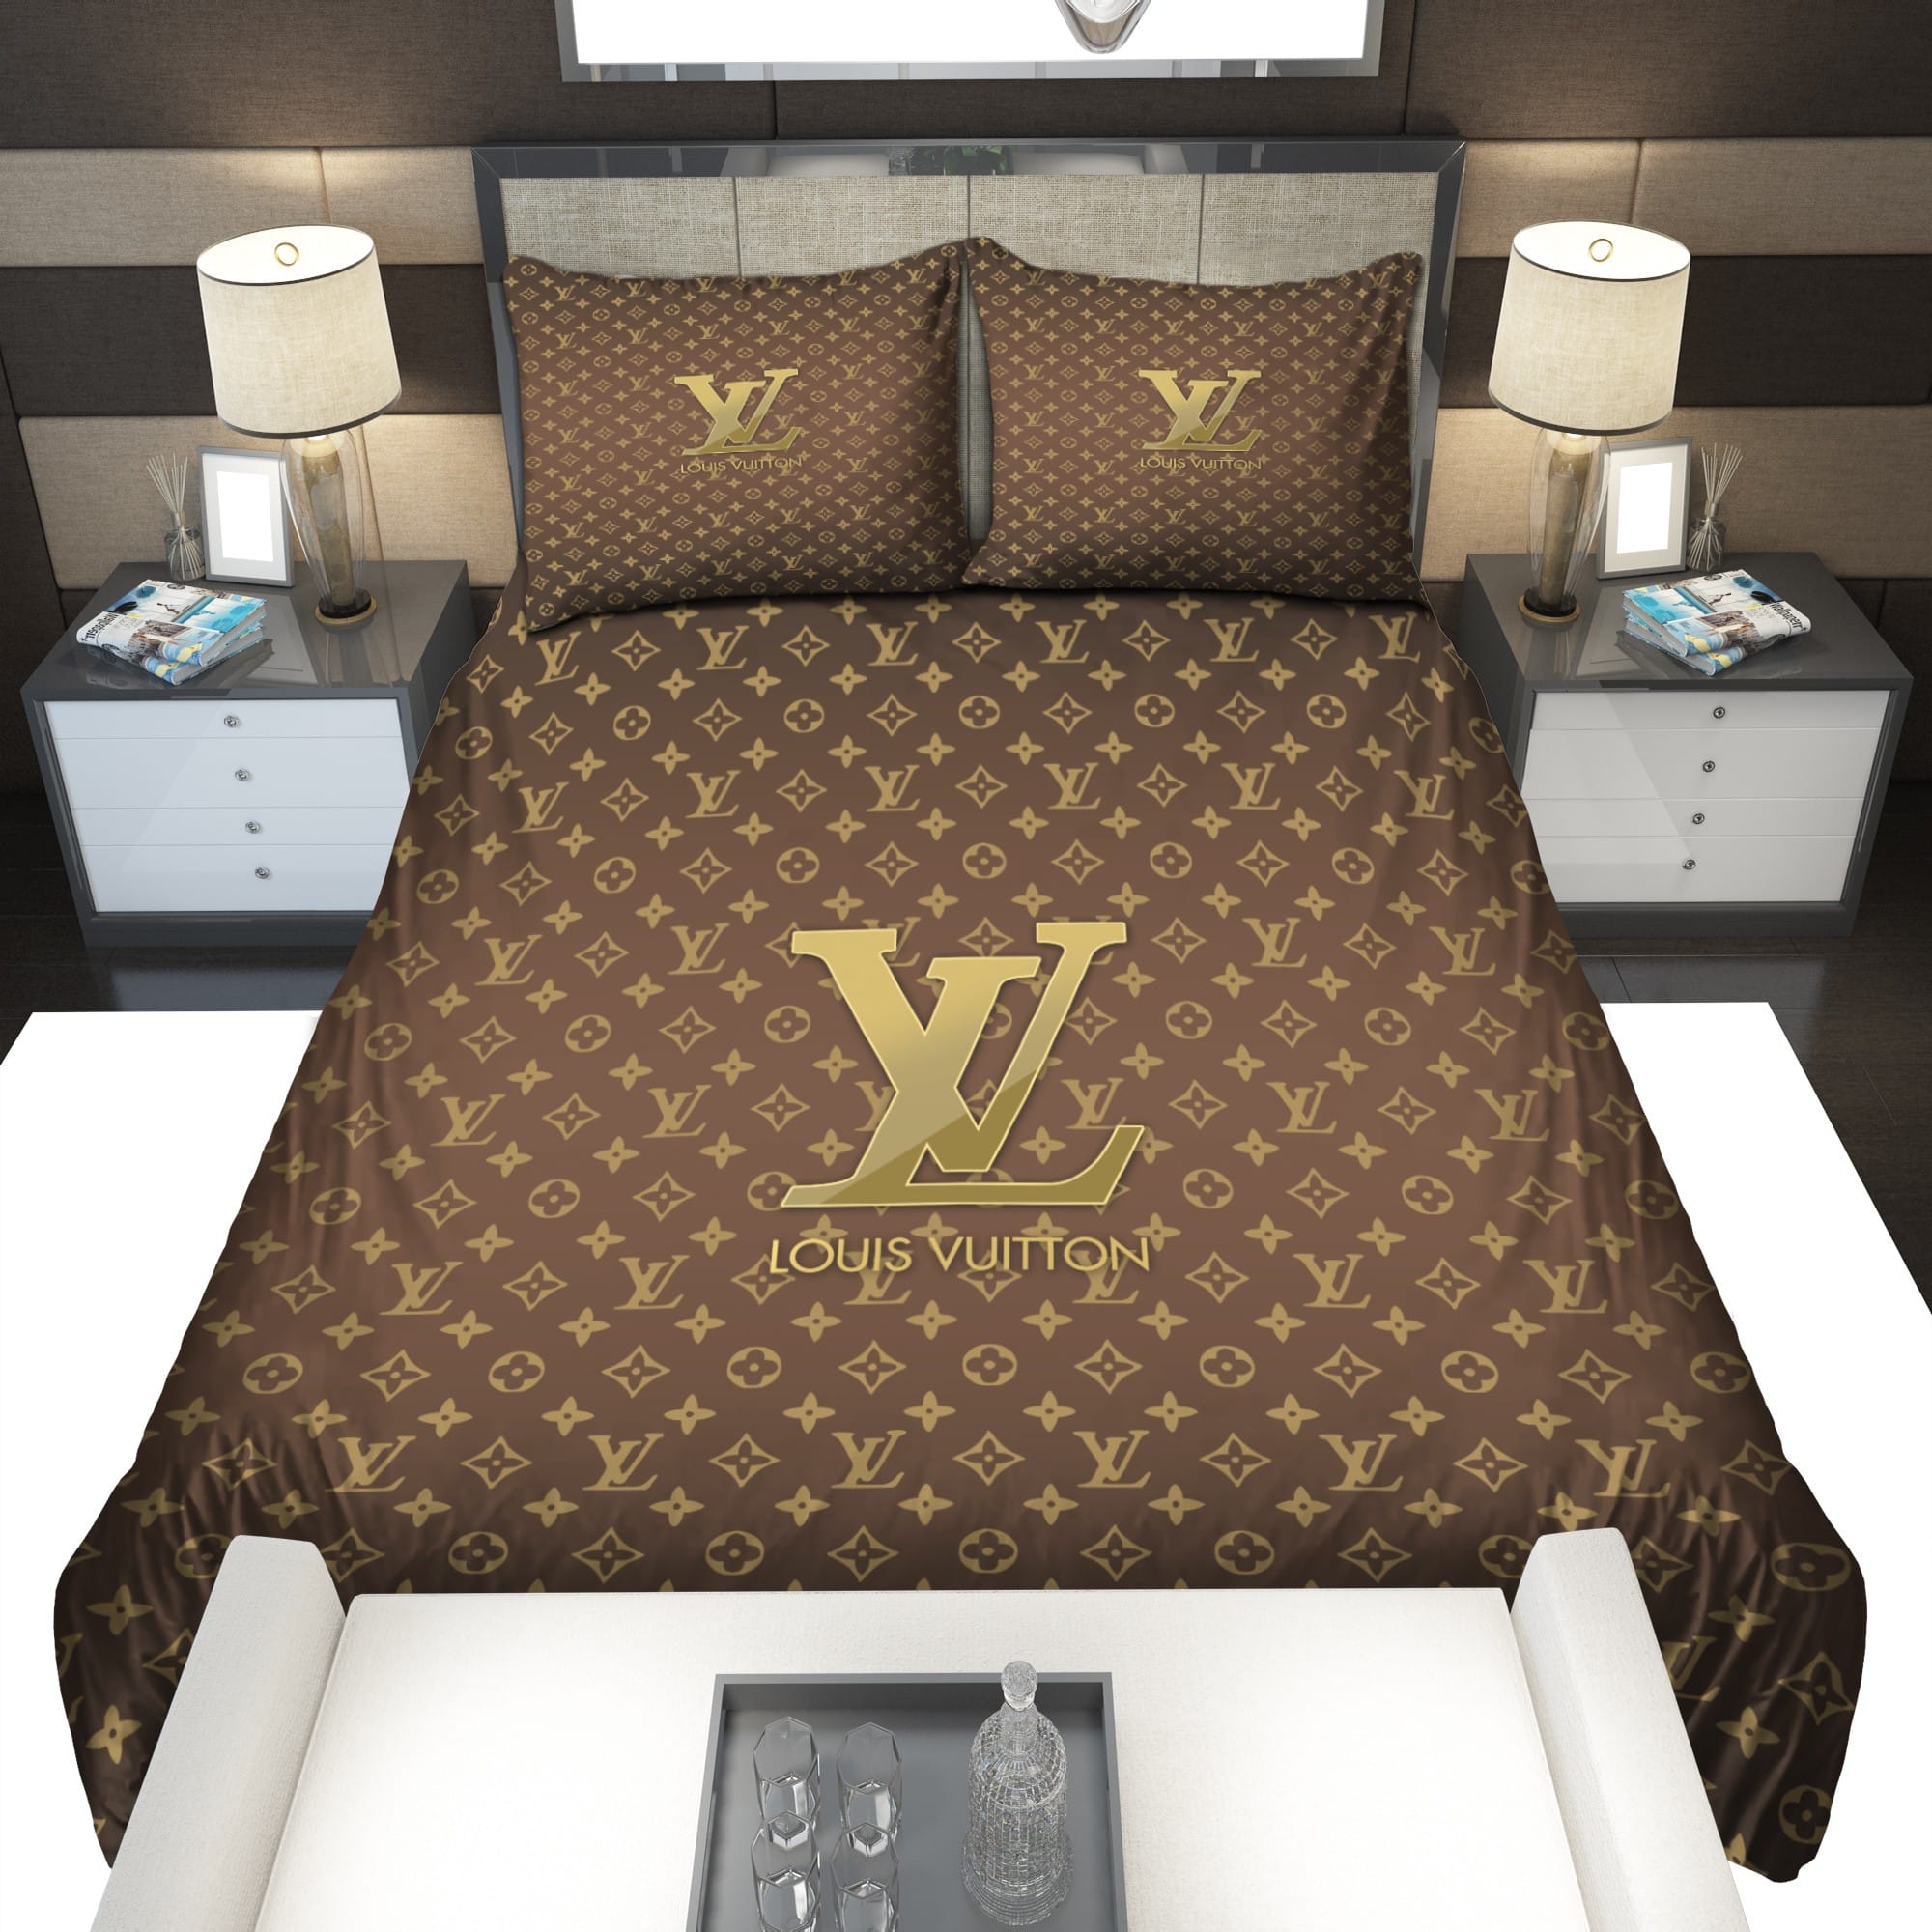 Buy Louis Vuitton Brands 5 Bedding Set Bed Sets